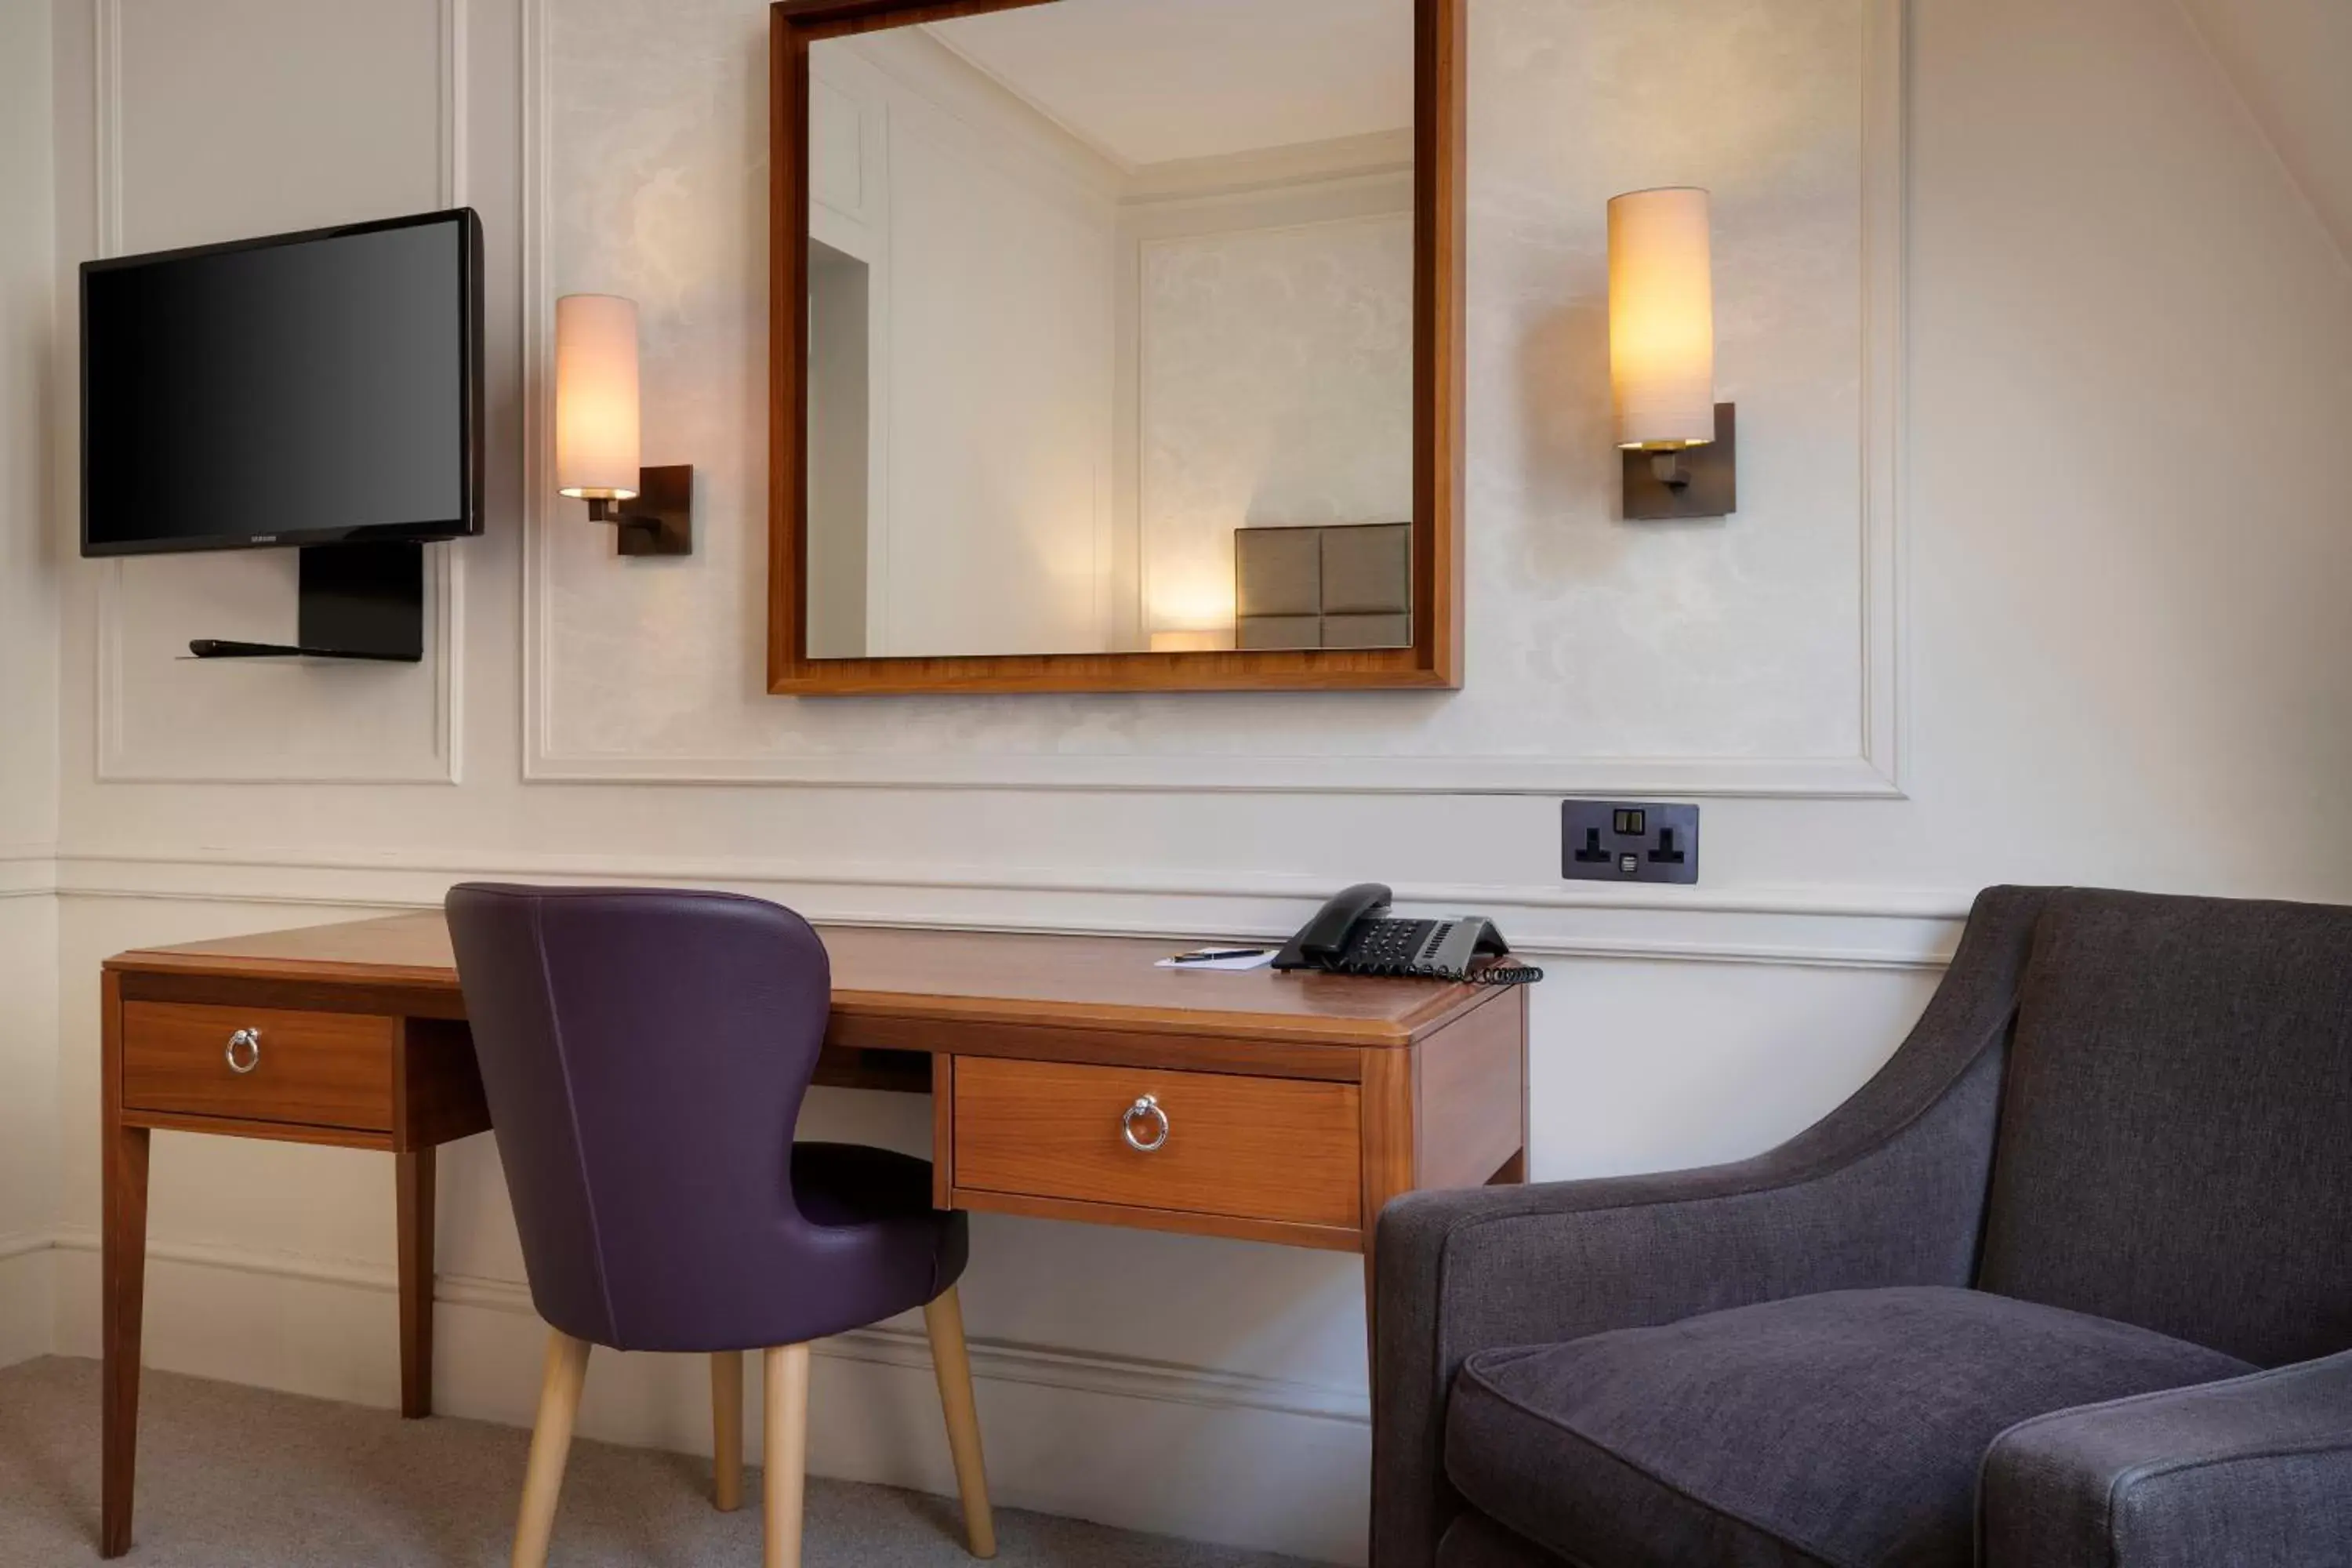 Bedroom, TV/Entertainment Center in Sloane Square Hotel